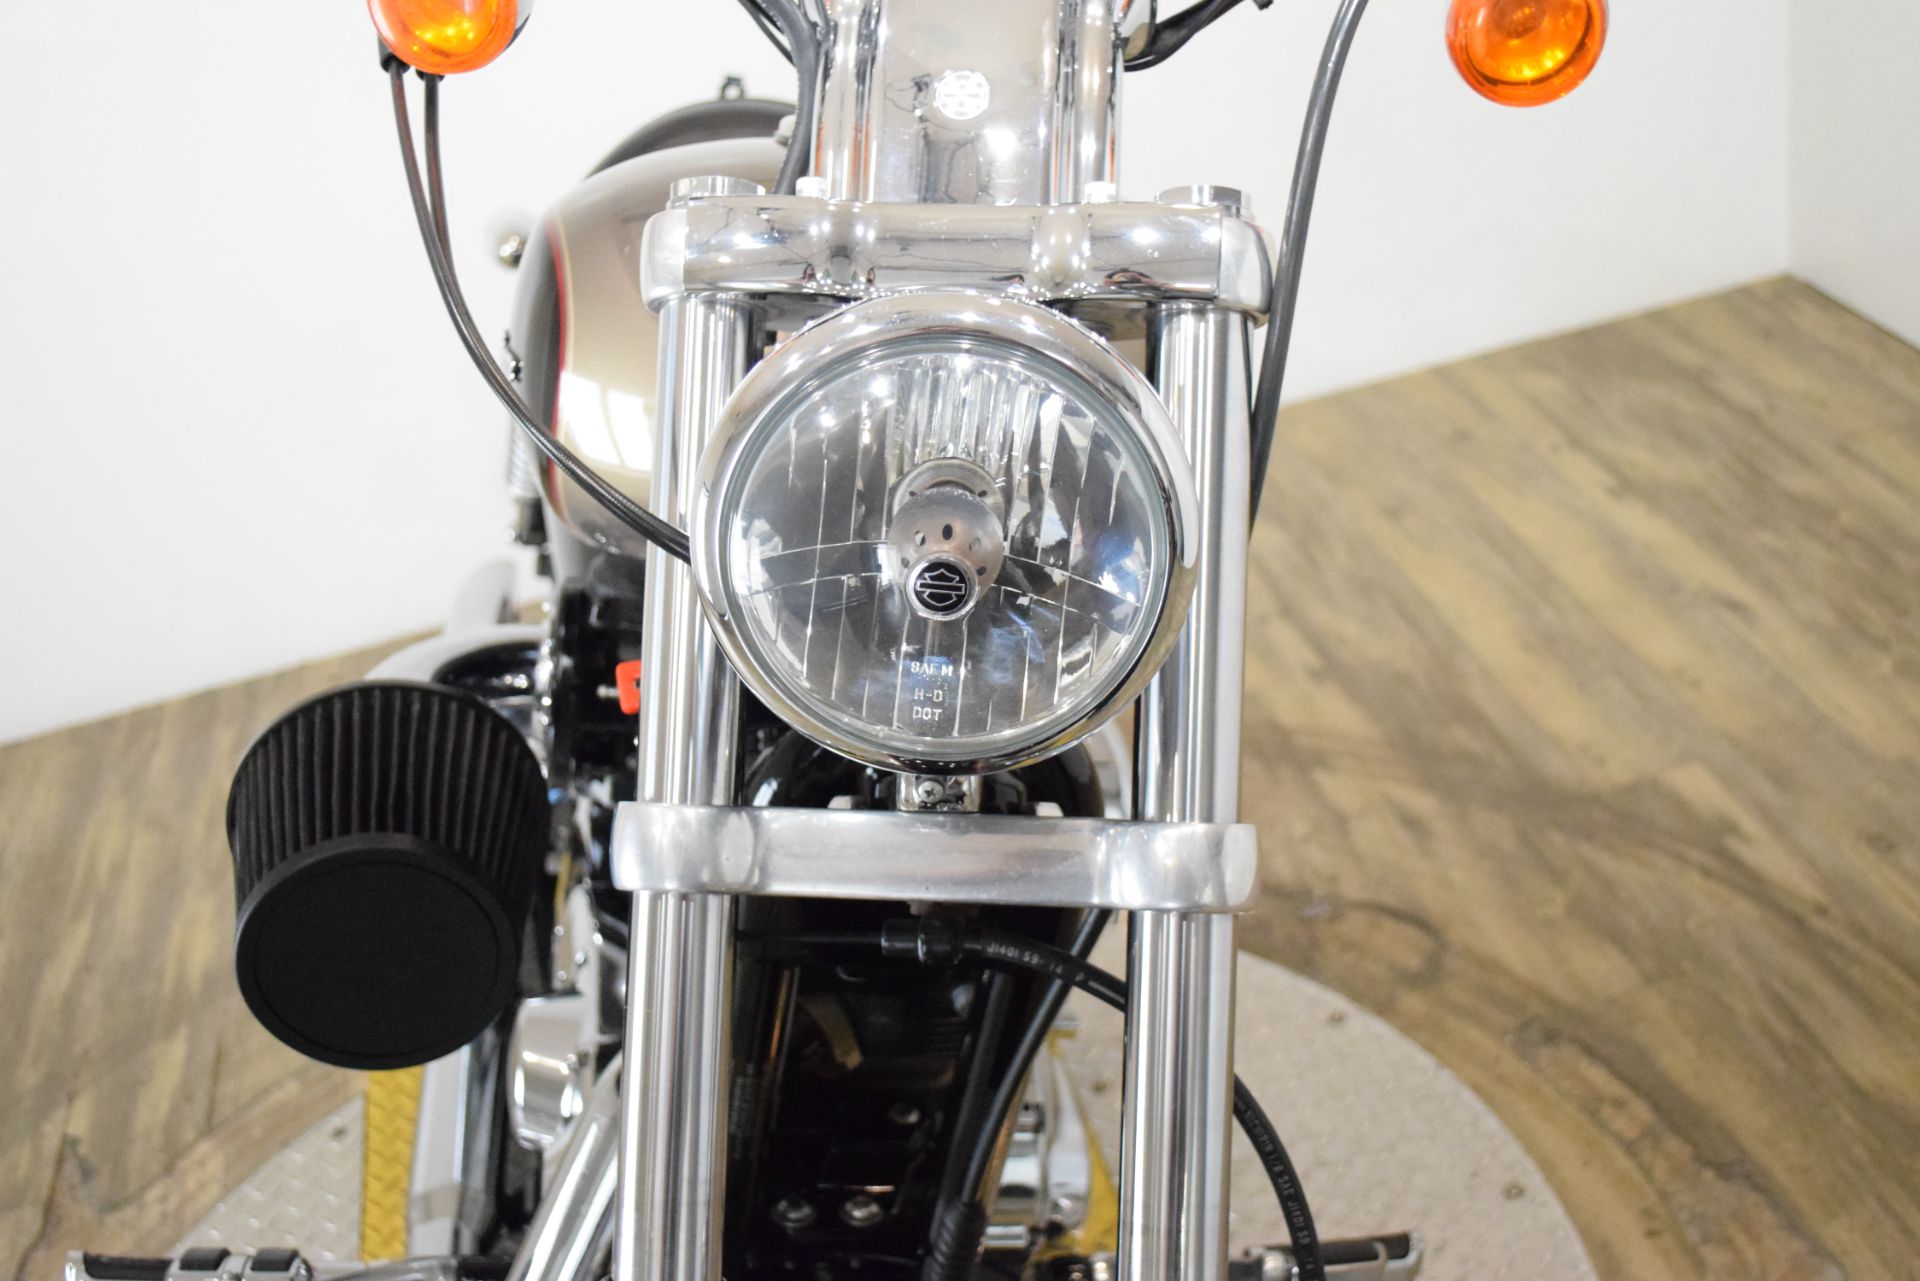 2005 Harley-Davidson Sportster® XL 1200 Custom in Wauconda, Illinois - Photo 12